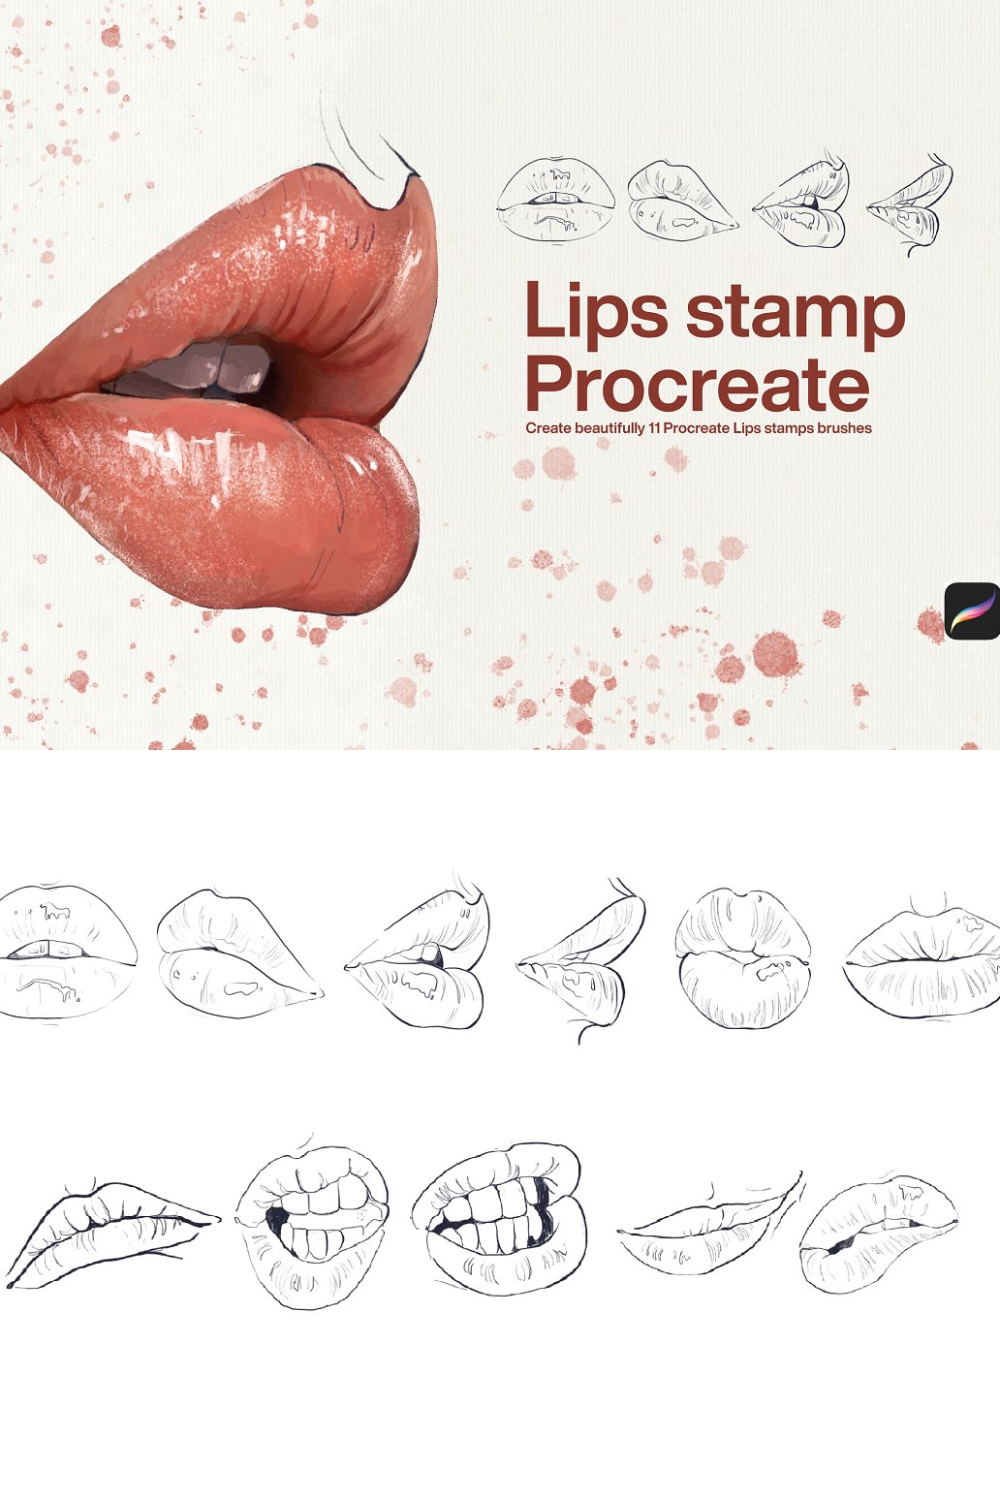 10 Lips Stamps Procreate - Pinterest.